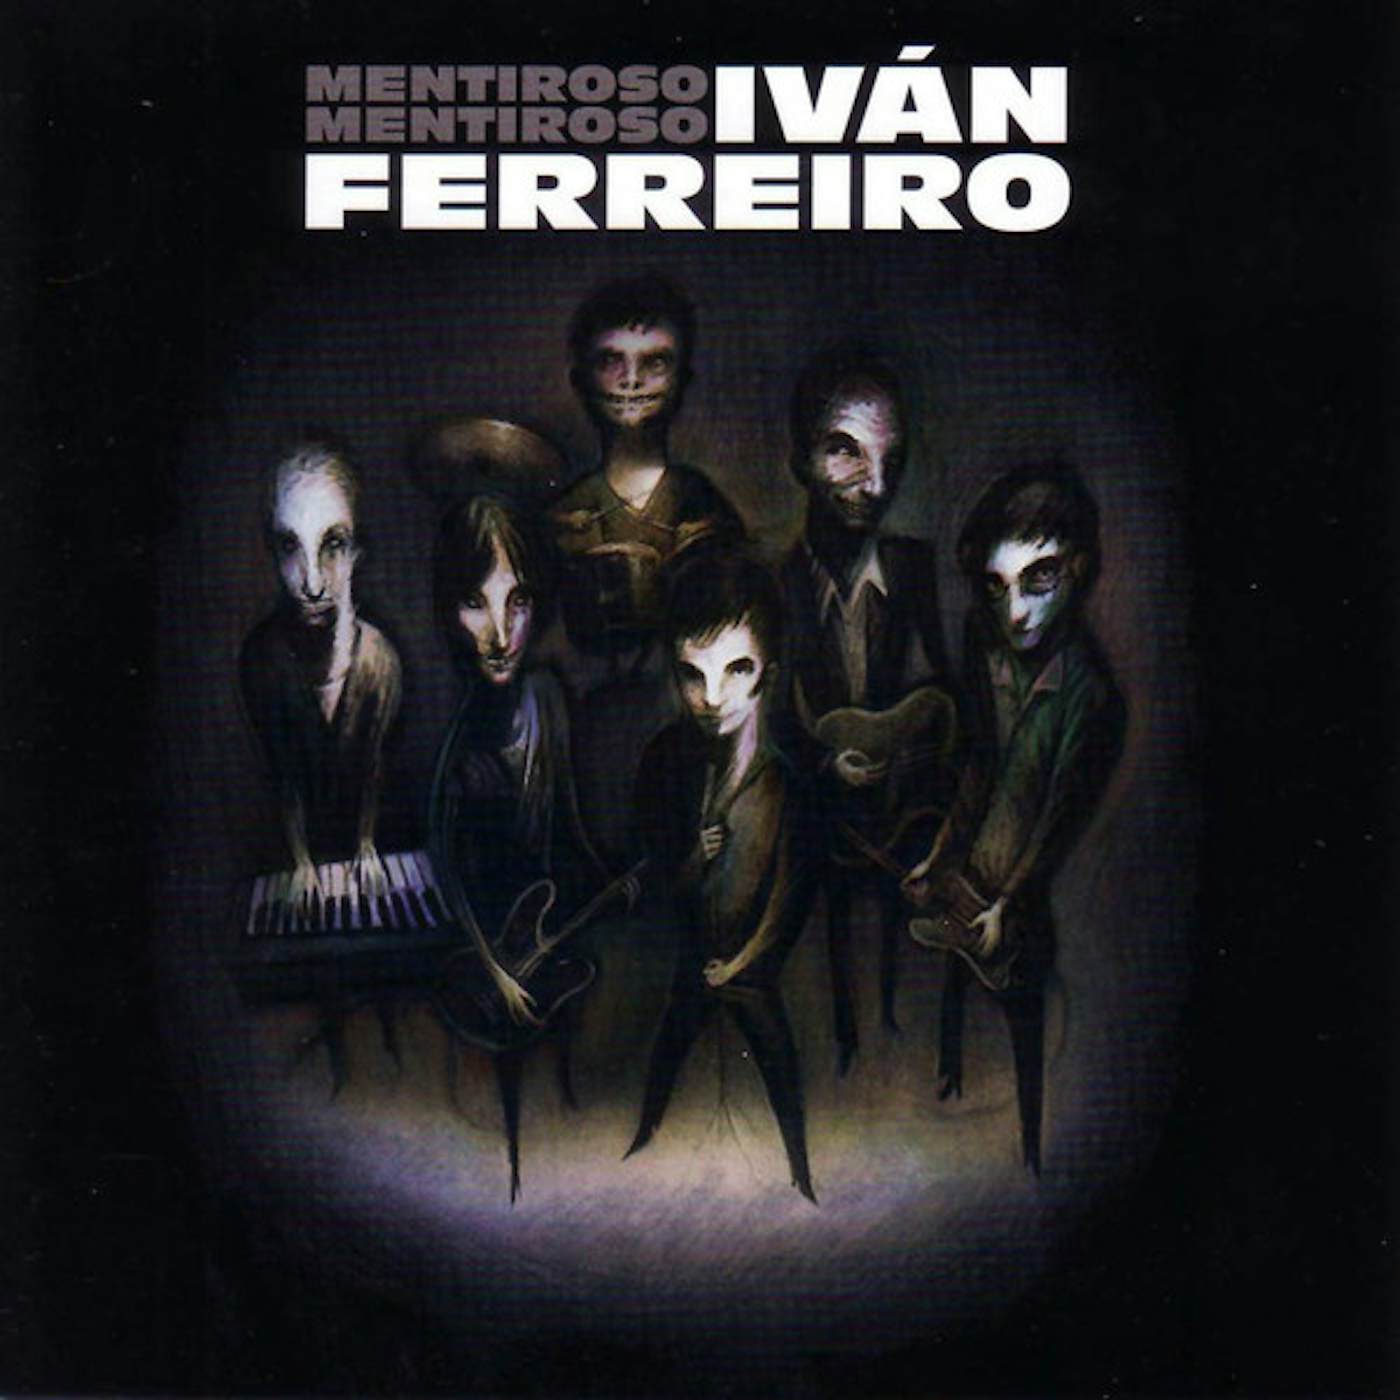 Ivan Ferreiro Mentiroso Mentiroso Vinyl Record